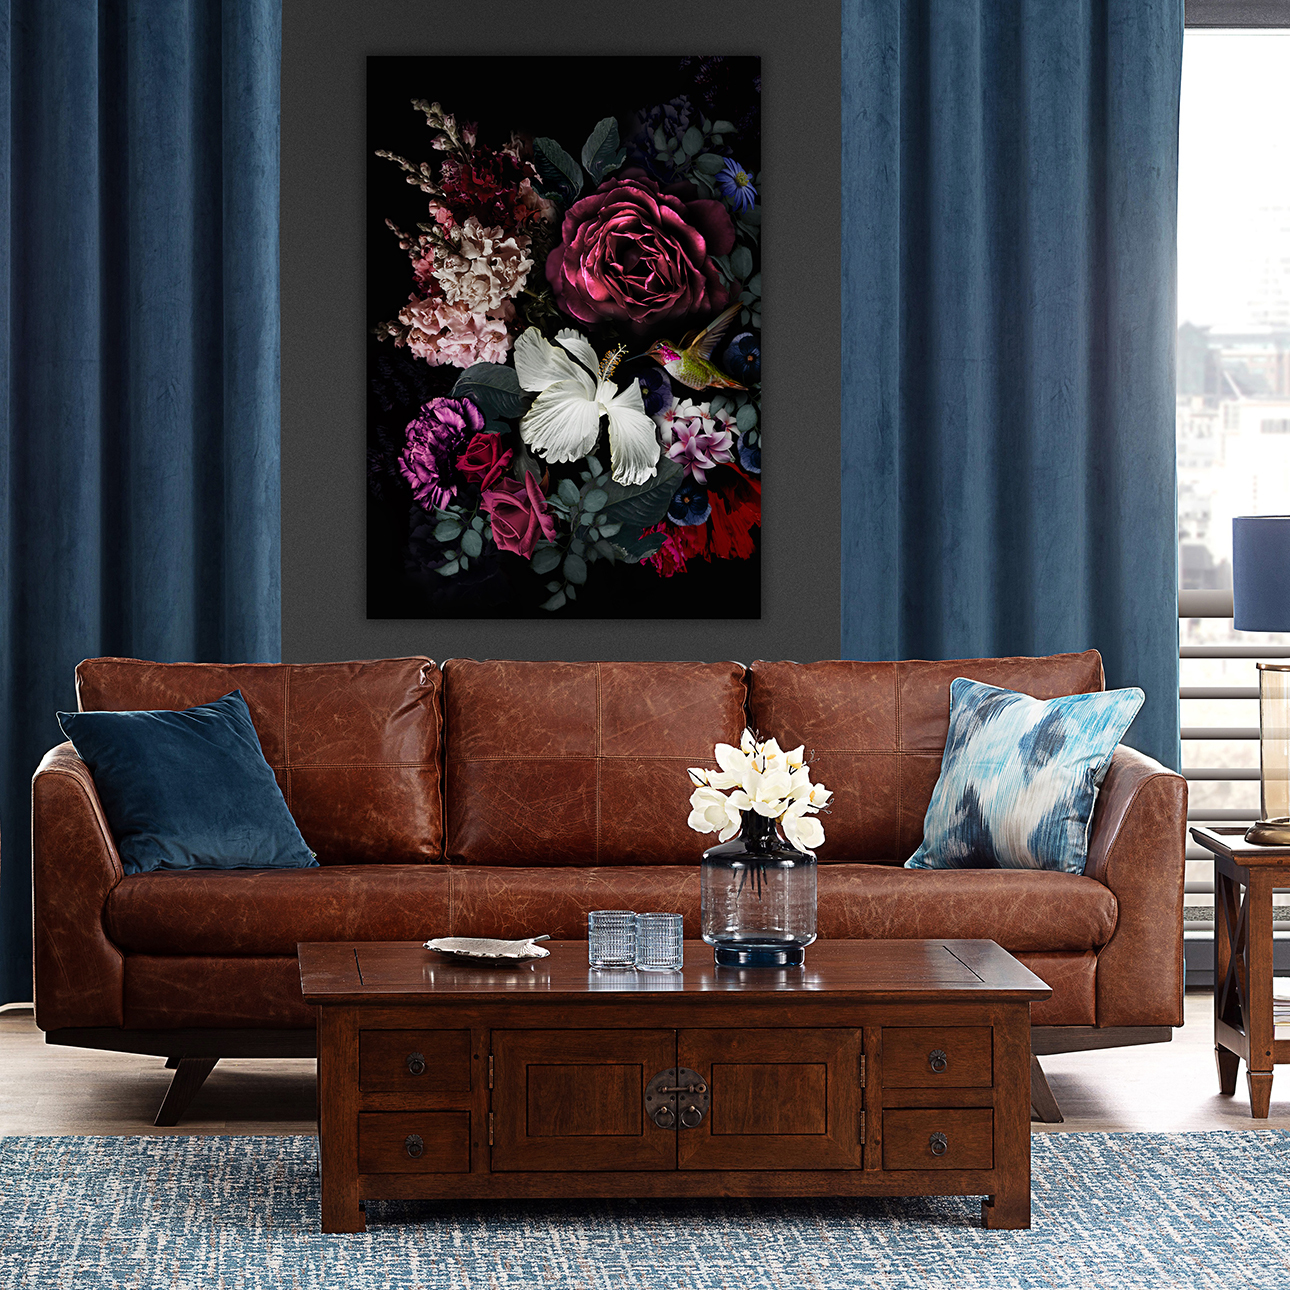 Leinwandbild Flowers I, 35 x 50 cm günstig online kaufen